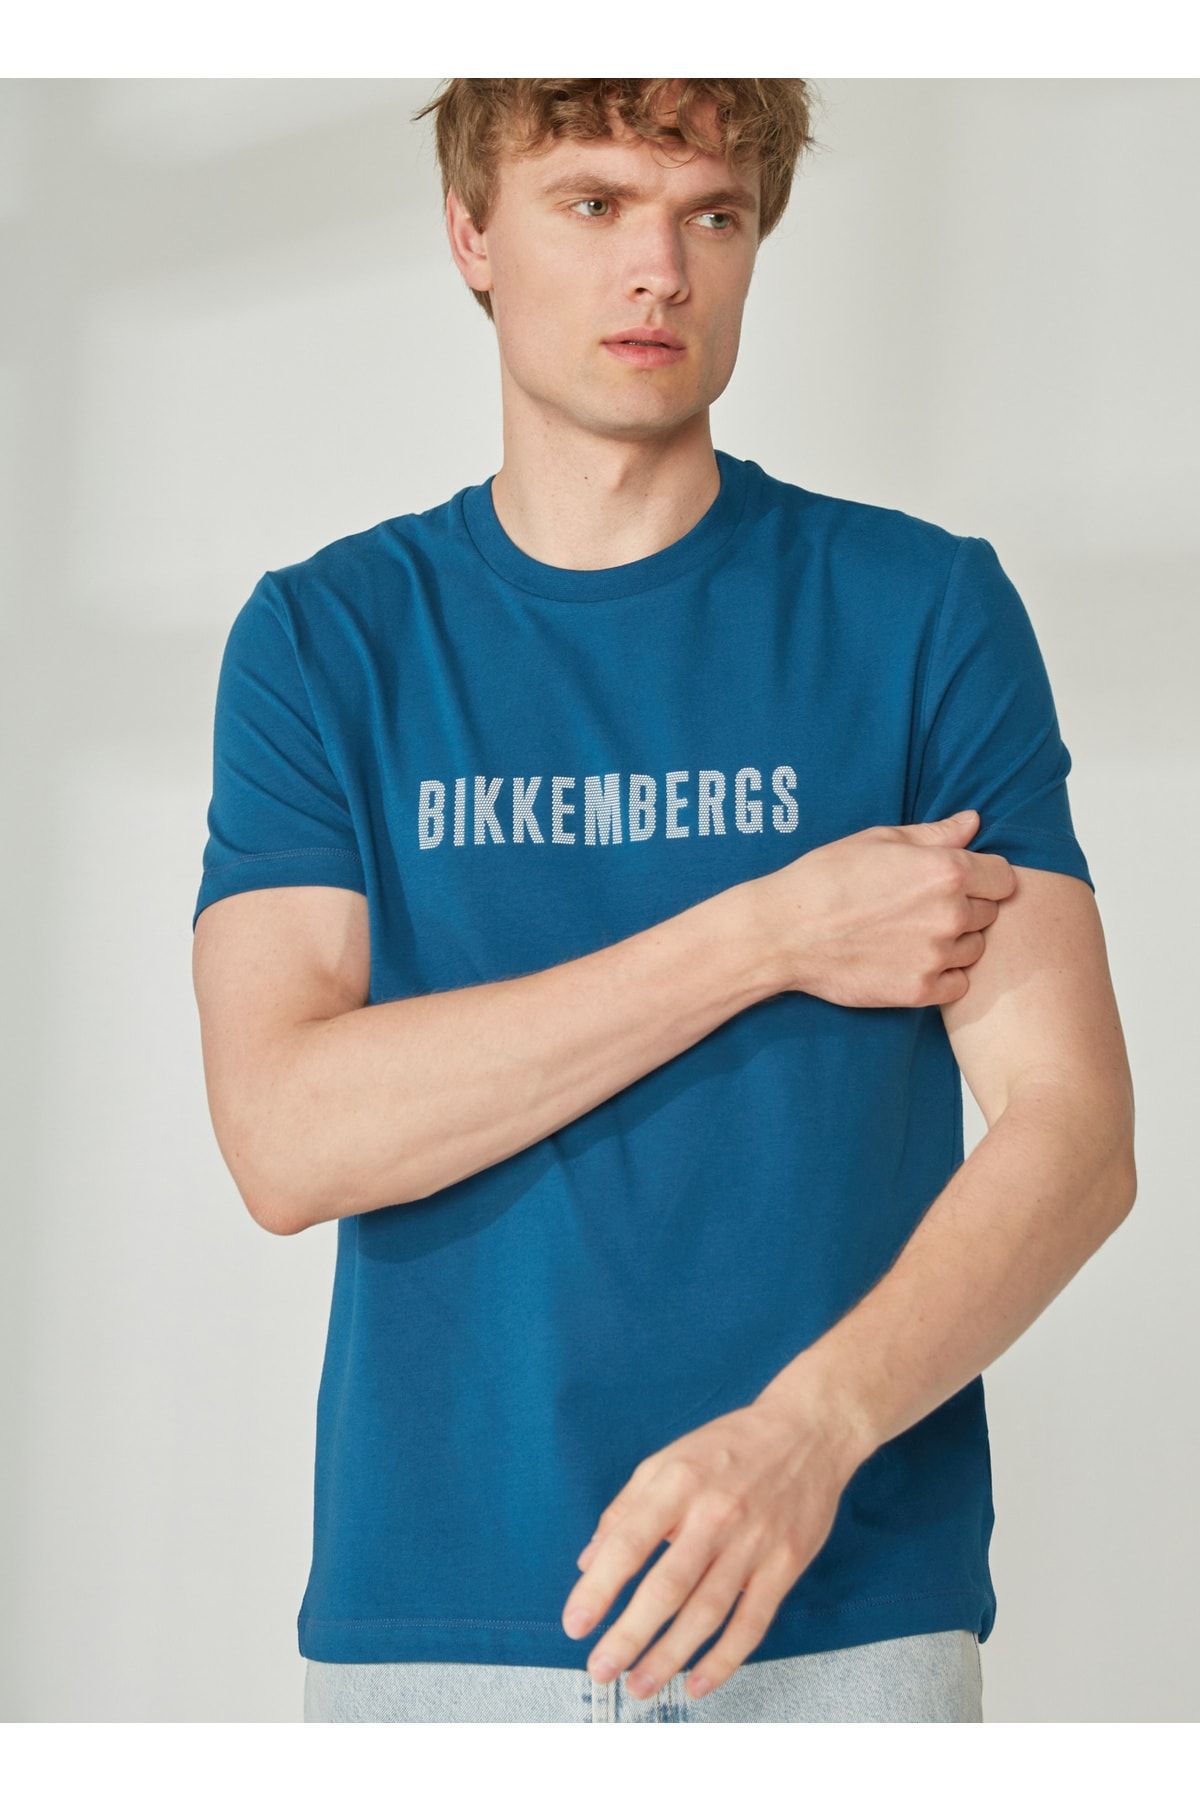 Bikkembergs Turkuaz Erkek T-Shirt C 4 101 2S